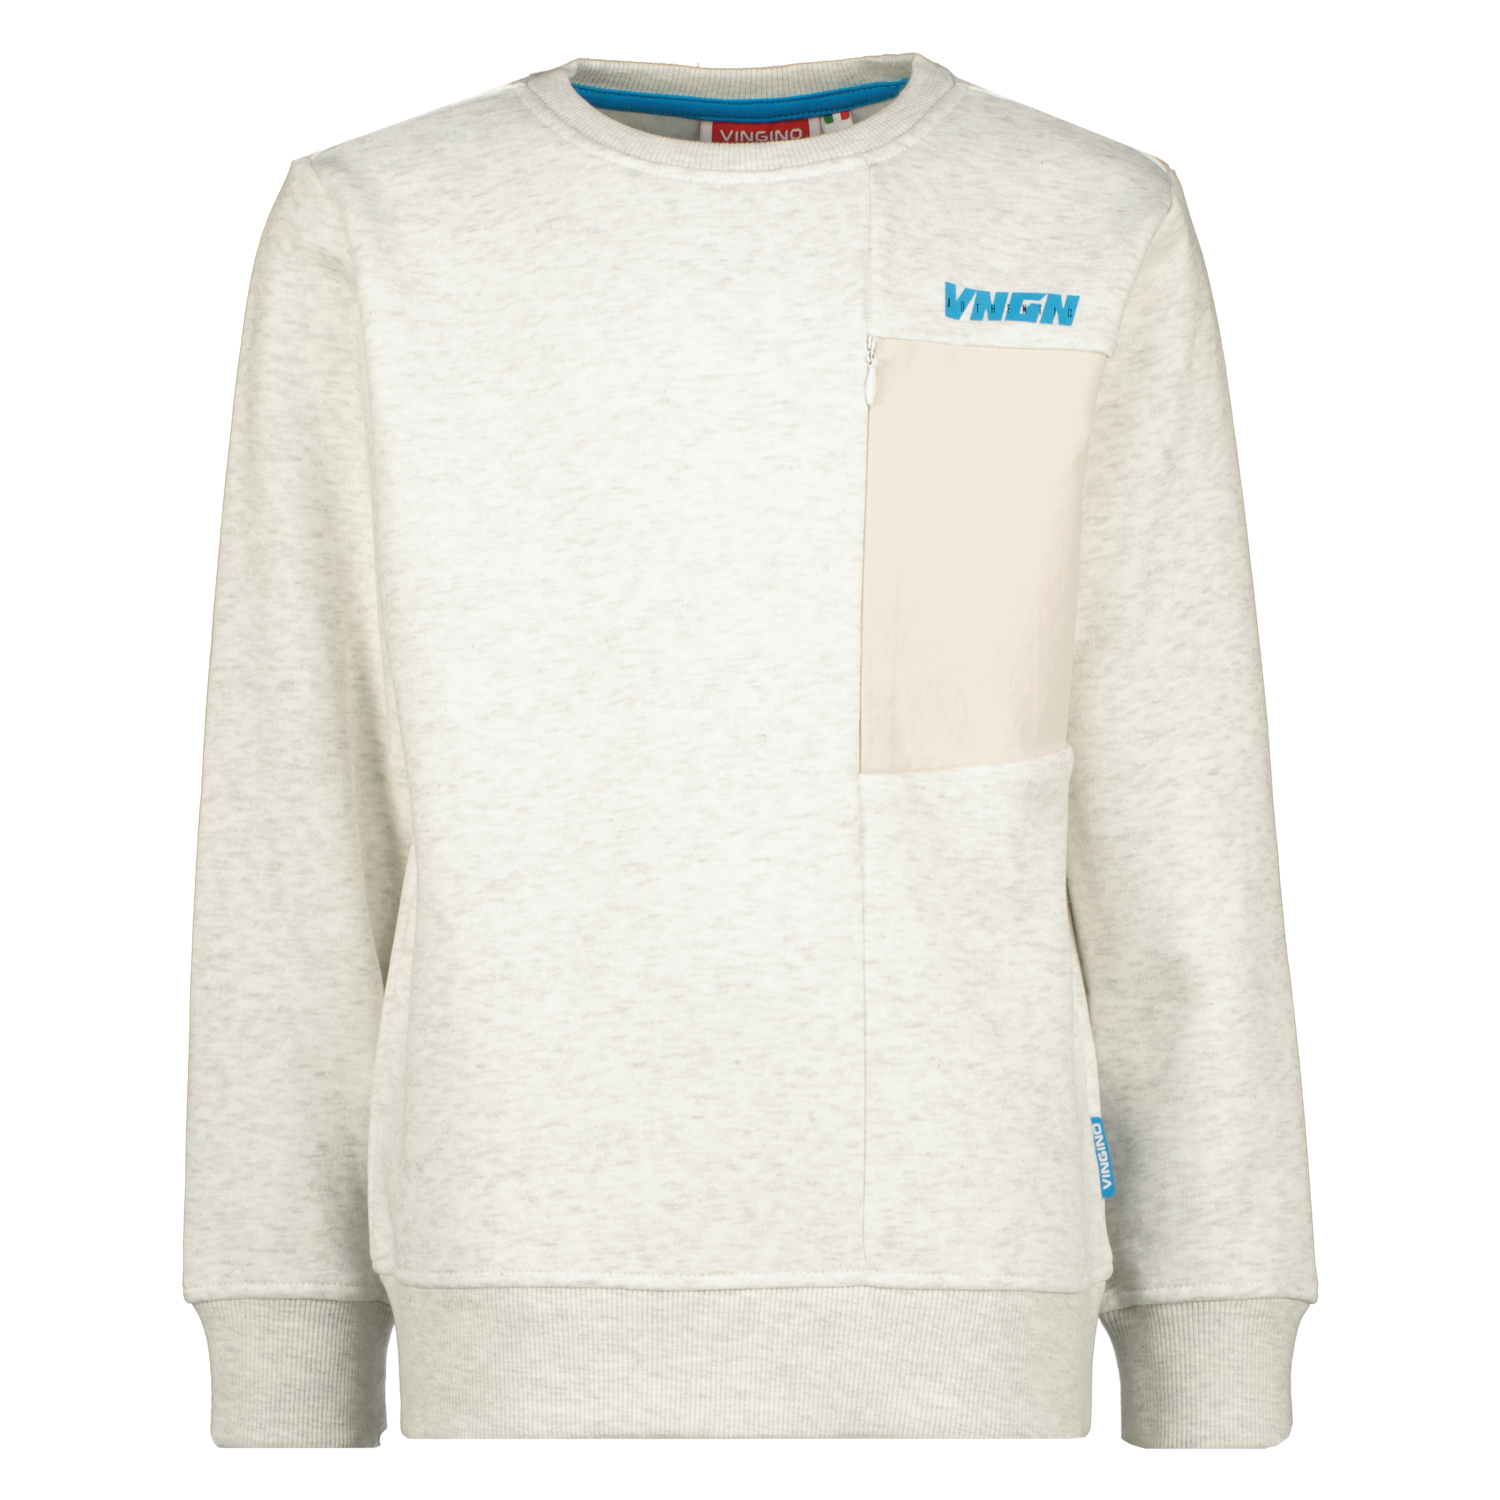 VN9220 Trui / Sweater NEREO